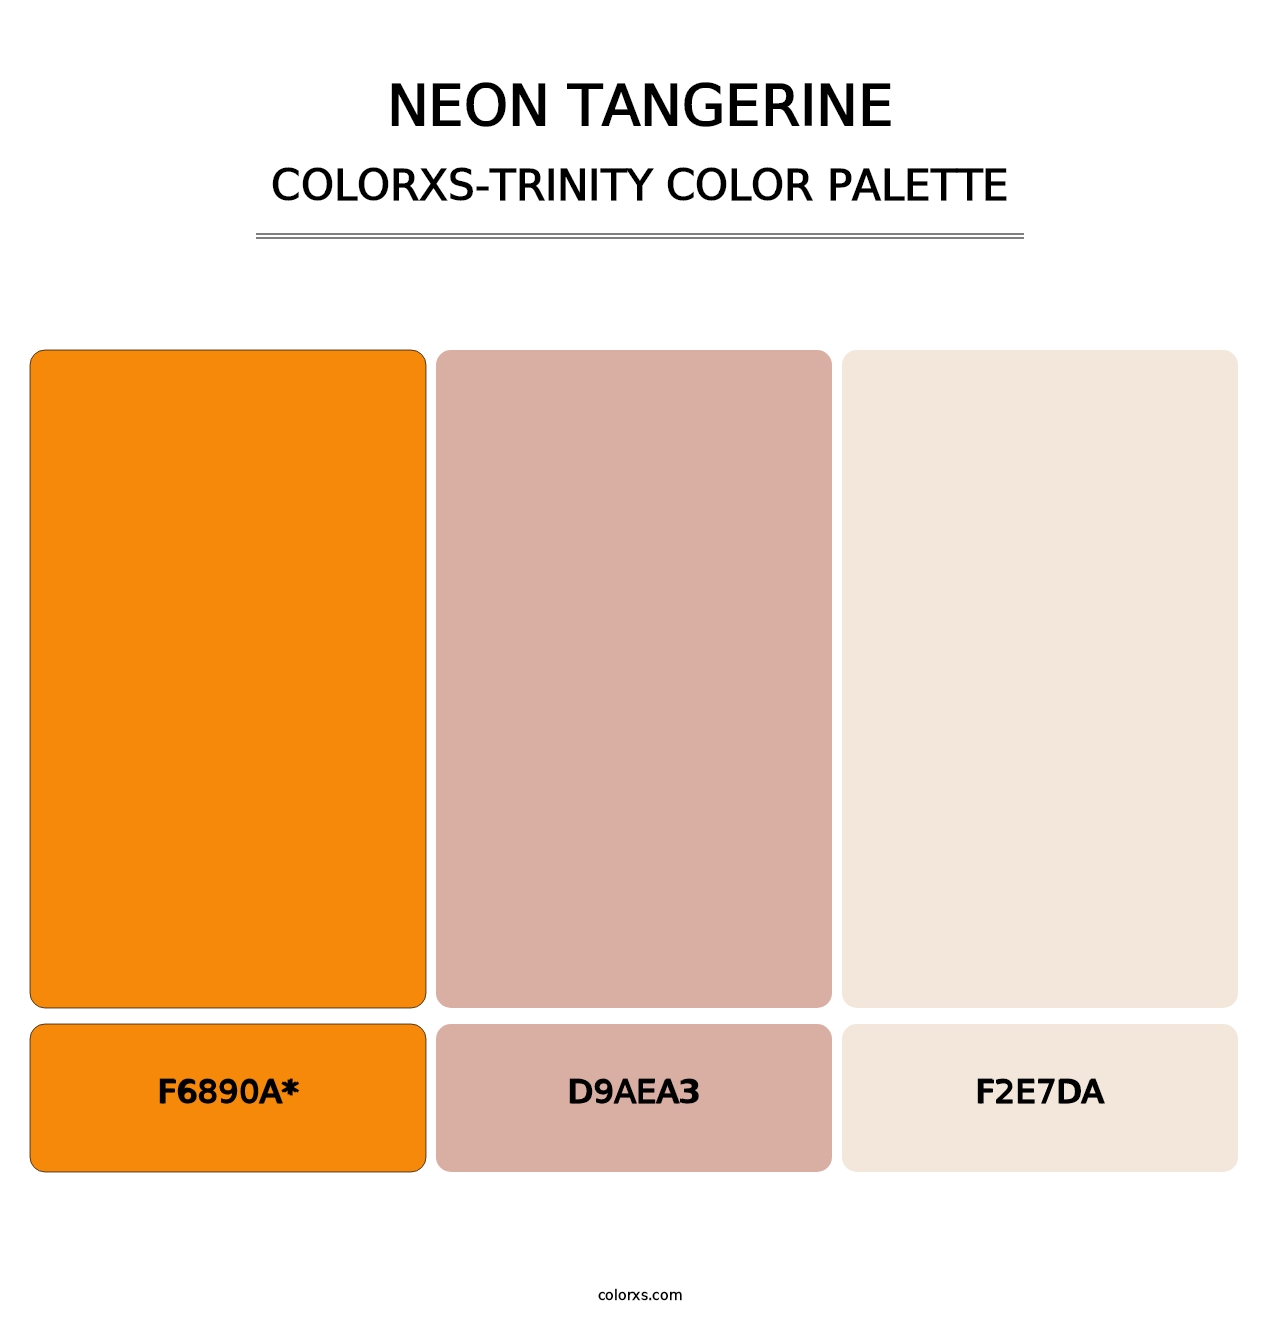 Neon Tangerine - Colorxs Trinity Palette